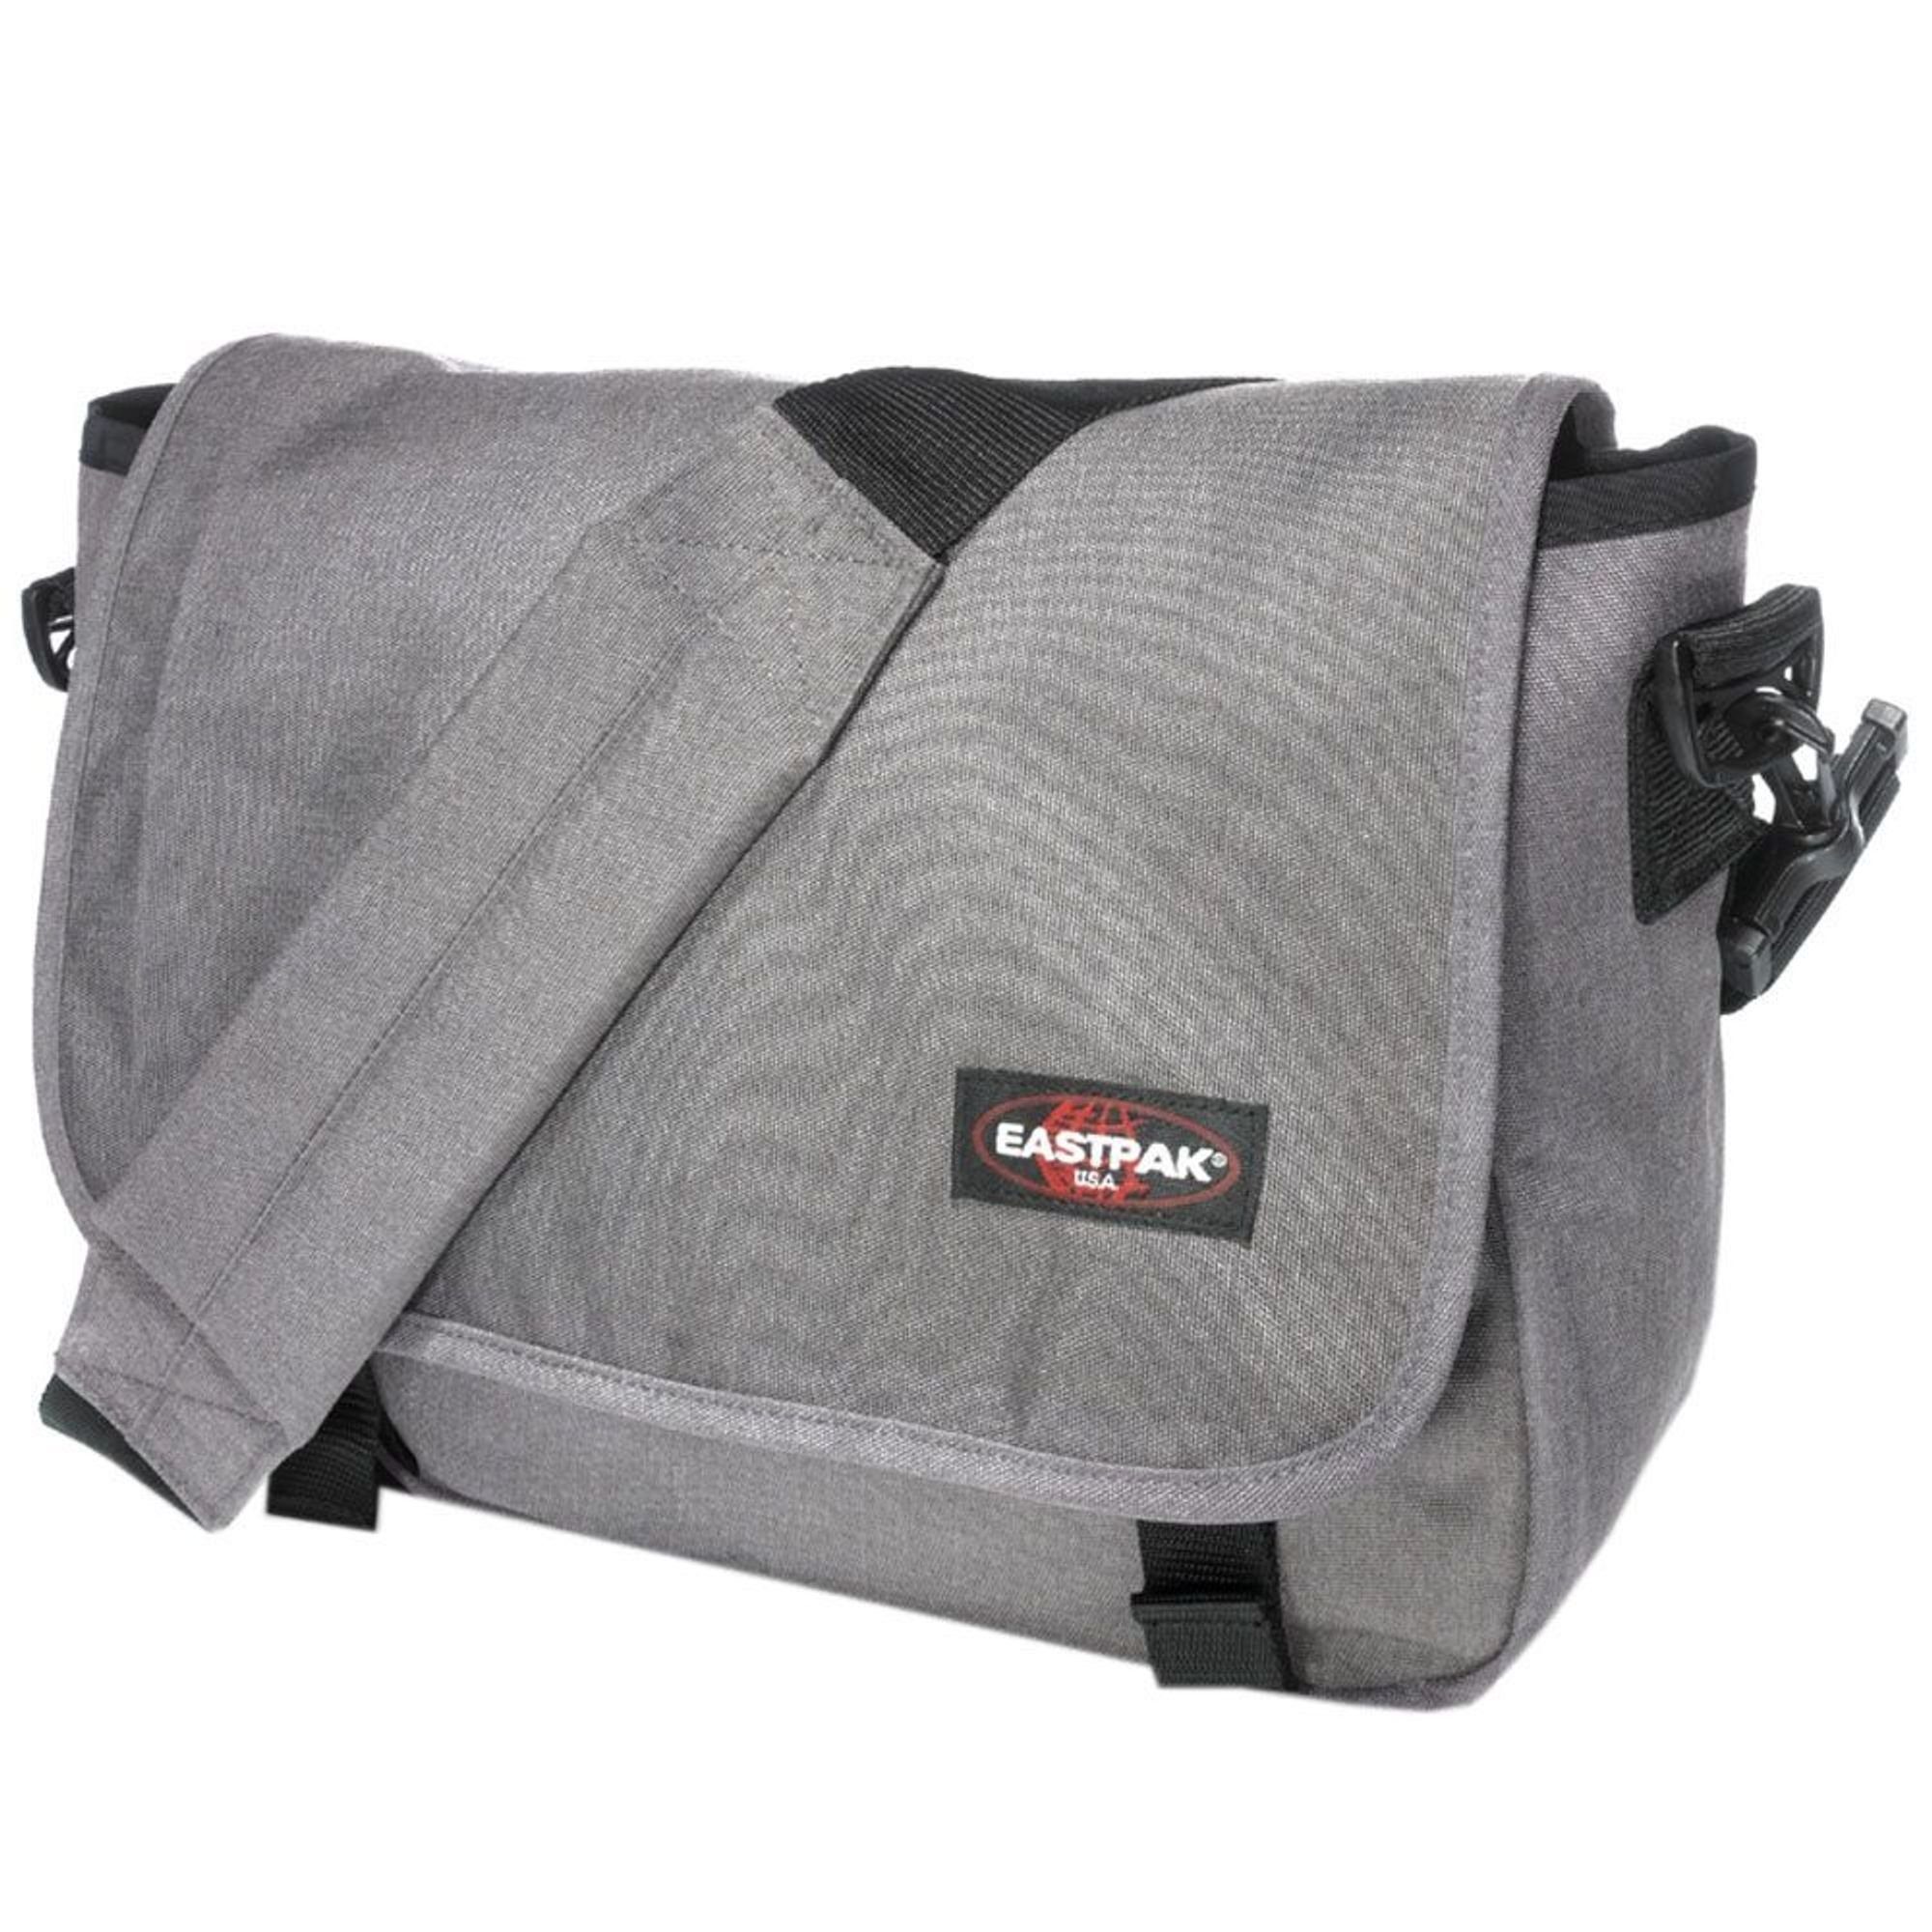 Eastpak Messenger Bag JR, Nylon sunday grey | Freizeitrucksäcke